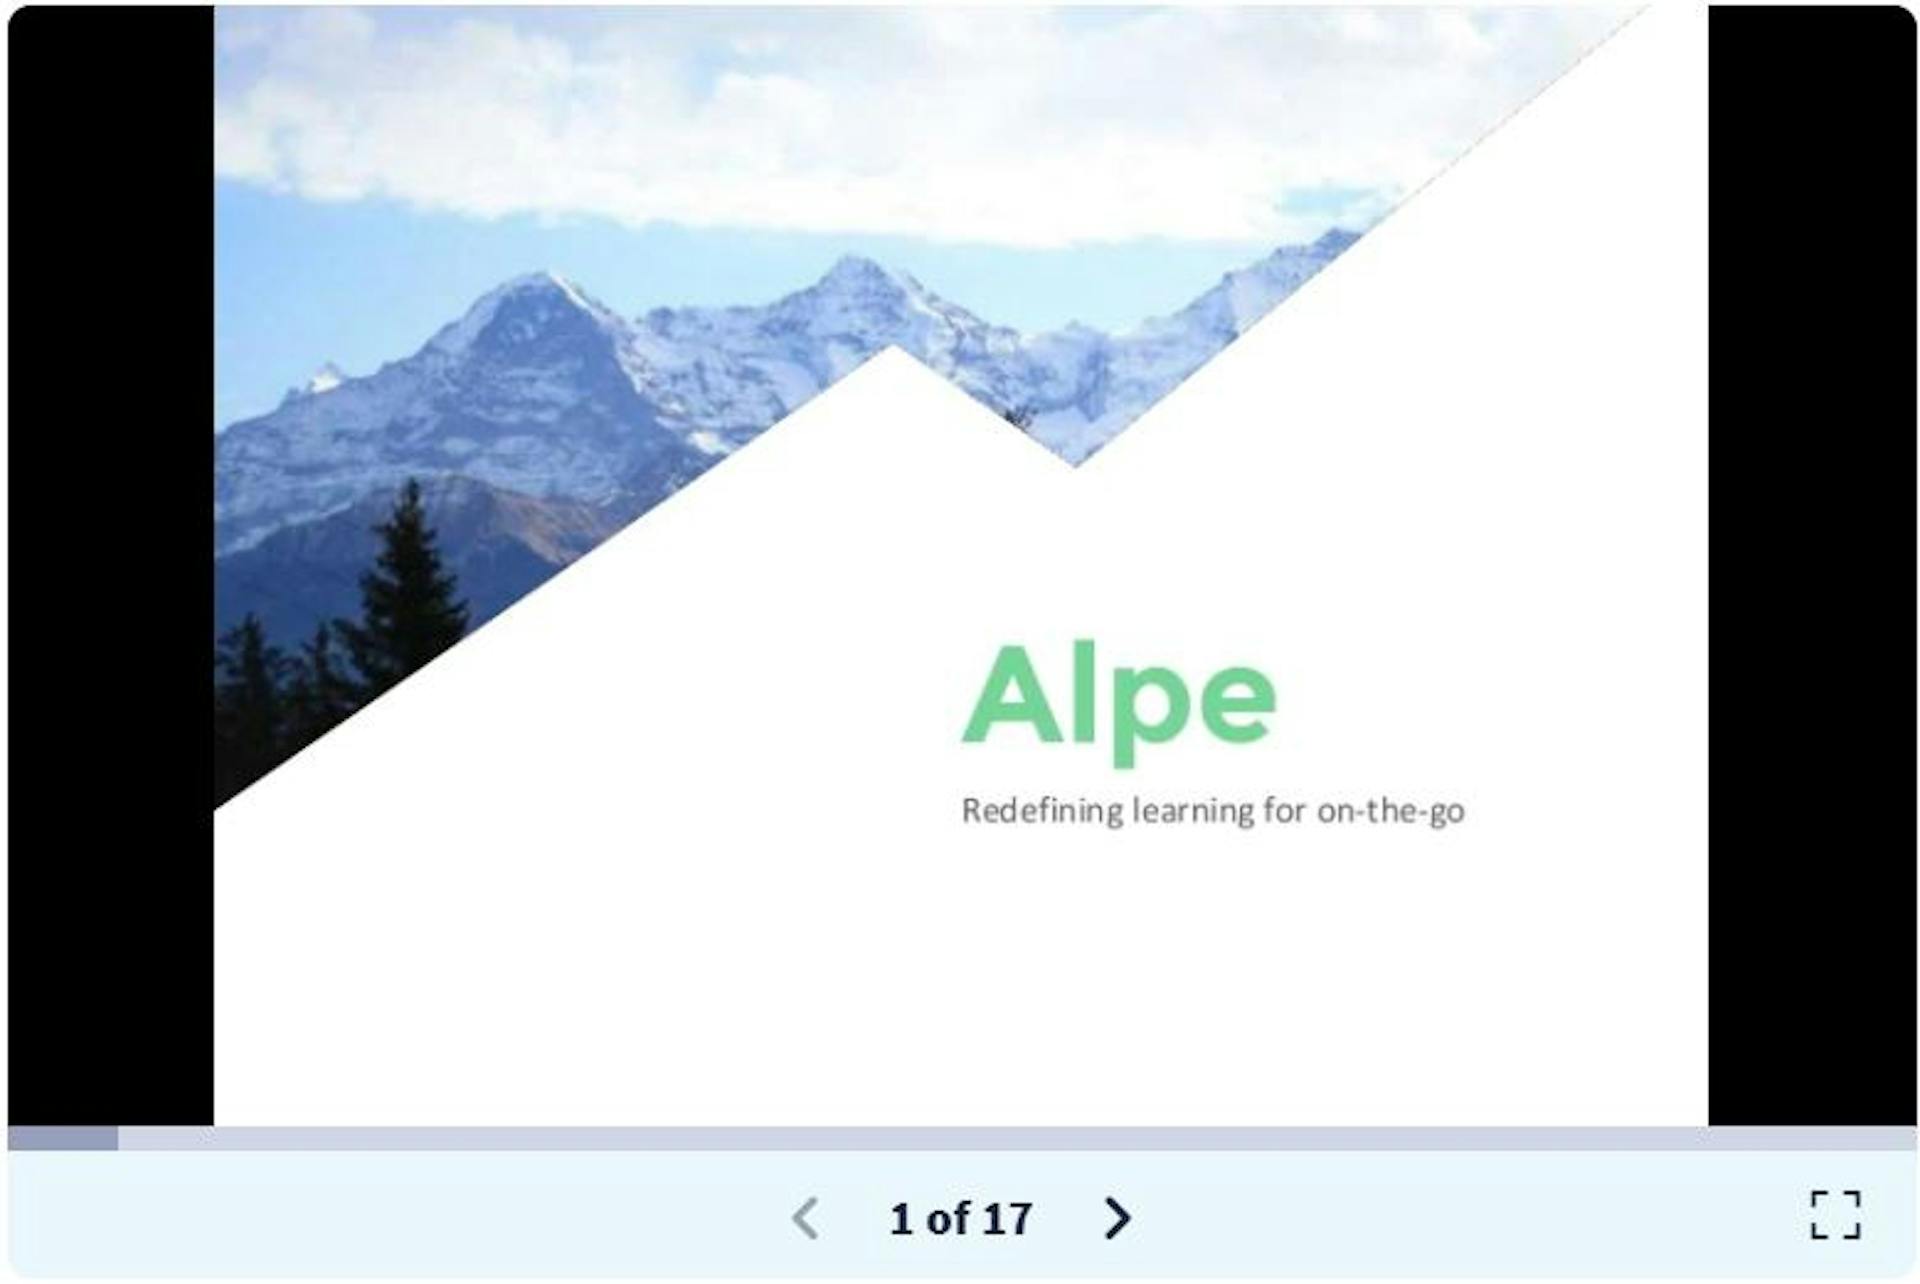 Alpe Audio's pre seed deck: https://www.slideshare.net/YehoshuaZlotogorski1/alpe-presentation